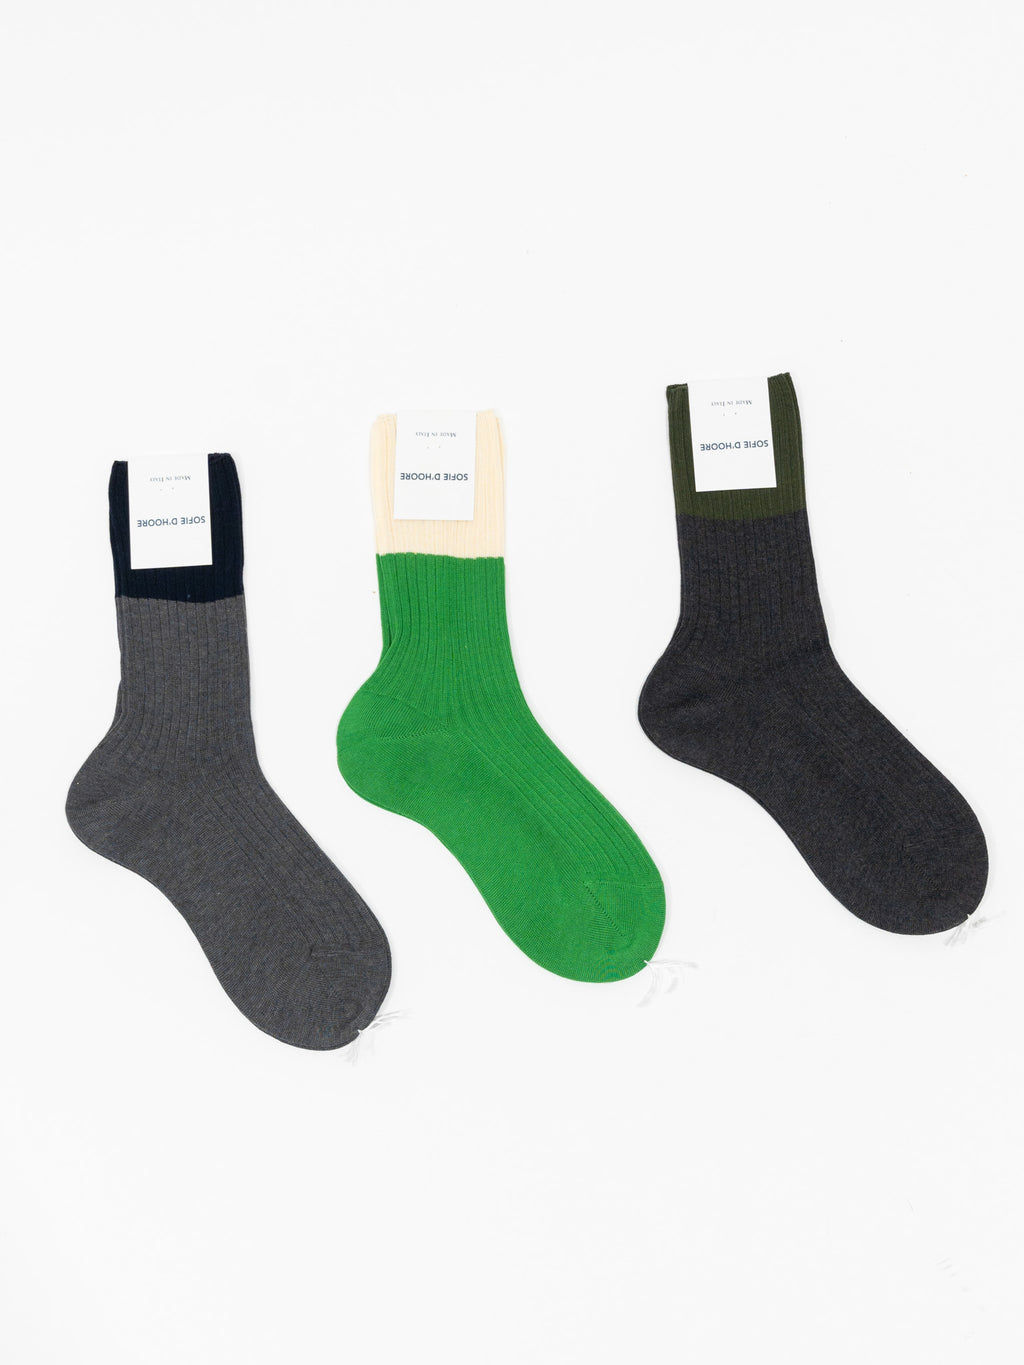 Namu Shop - Sofie D'Hoore Combi Socks - 3 Colors